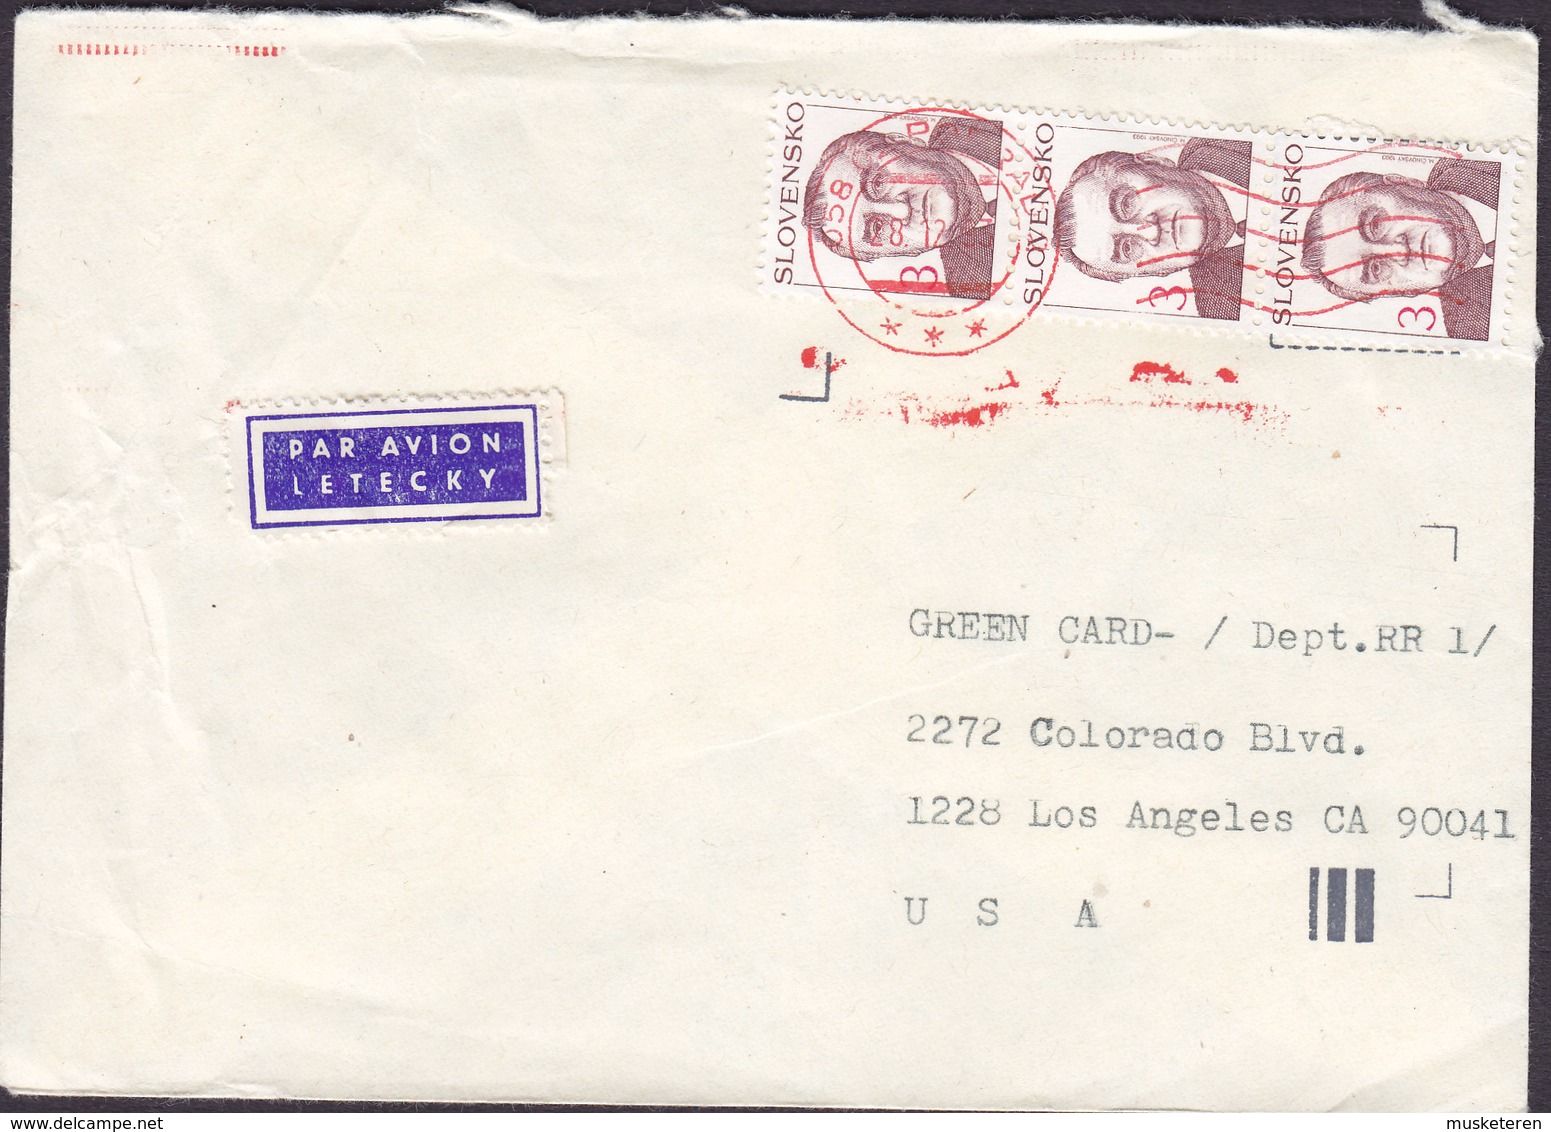 Slovakia PAR AVION Letecky Label 1993 Cover Brief LOS ANGELES United States 3-Stripe - Storia Postale